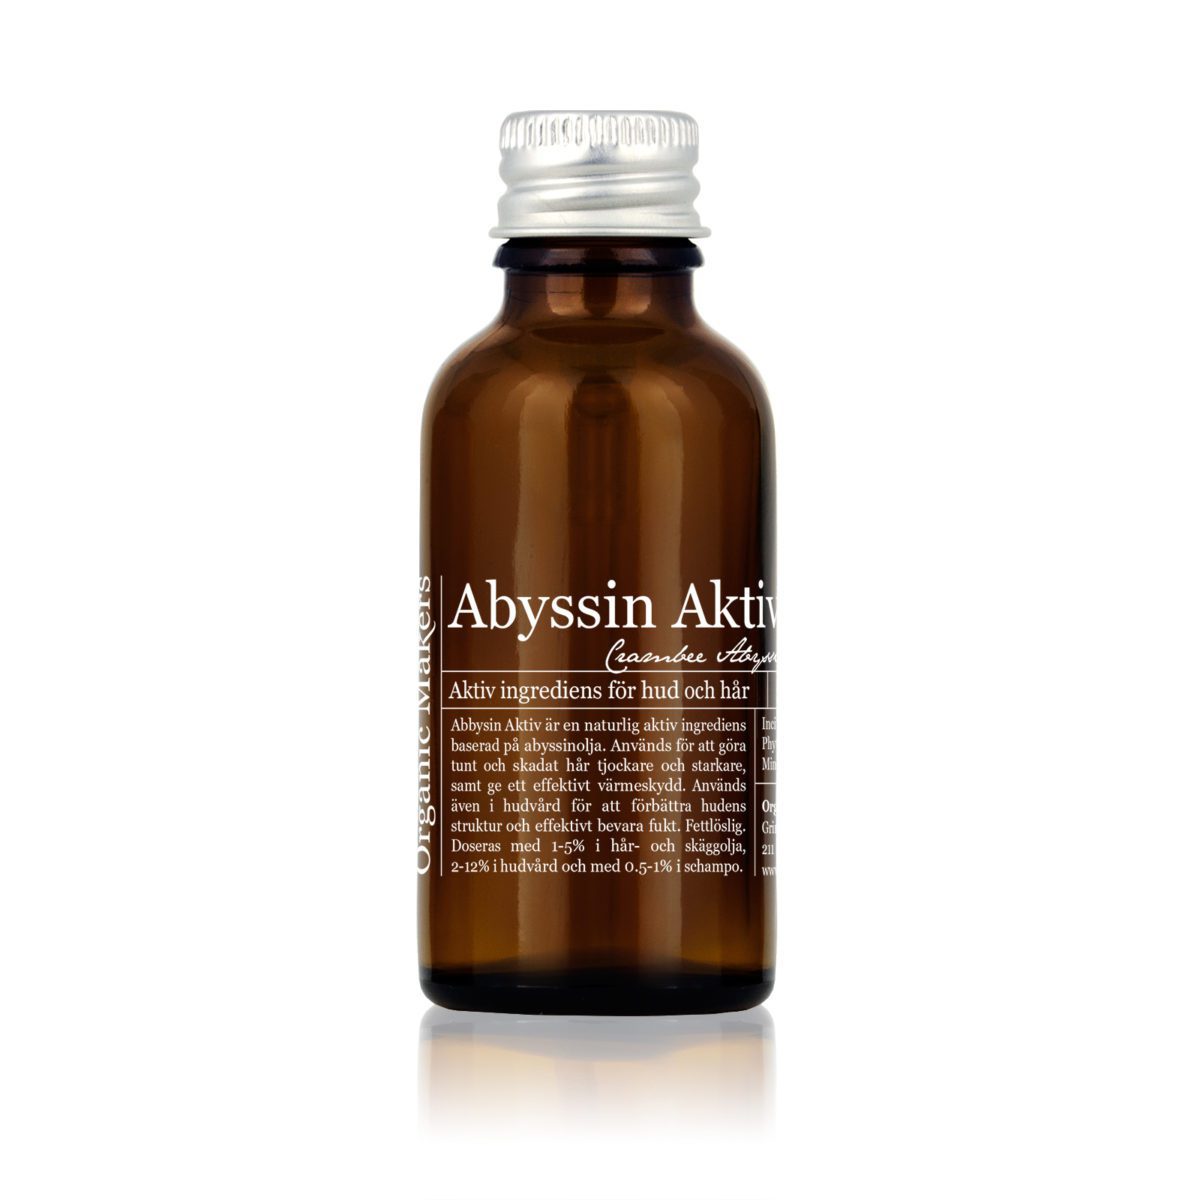 Abyssin Aktiv - Abessinolja - DIY hudvård & hårvård - organicmakers.se